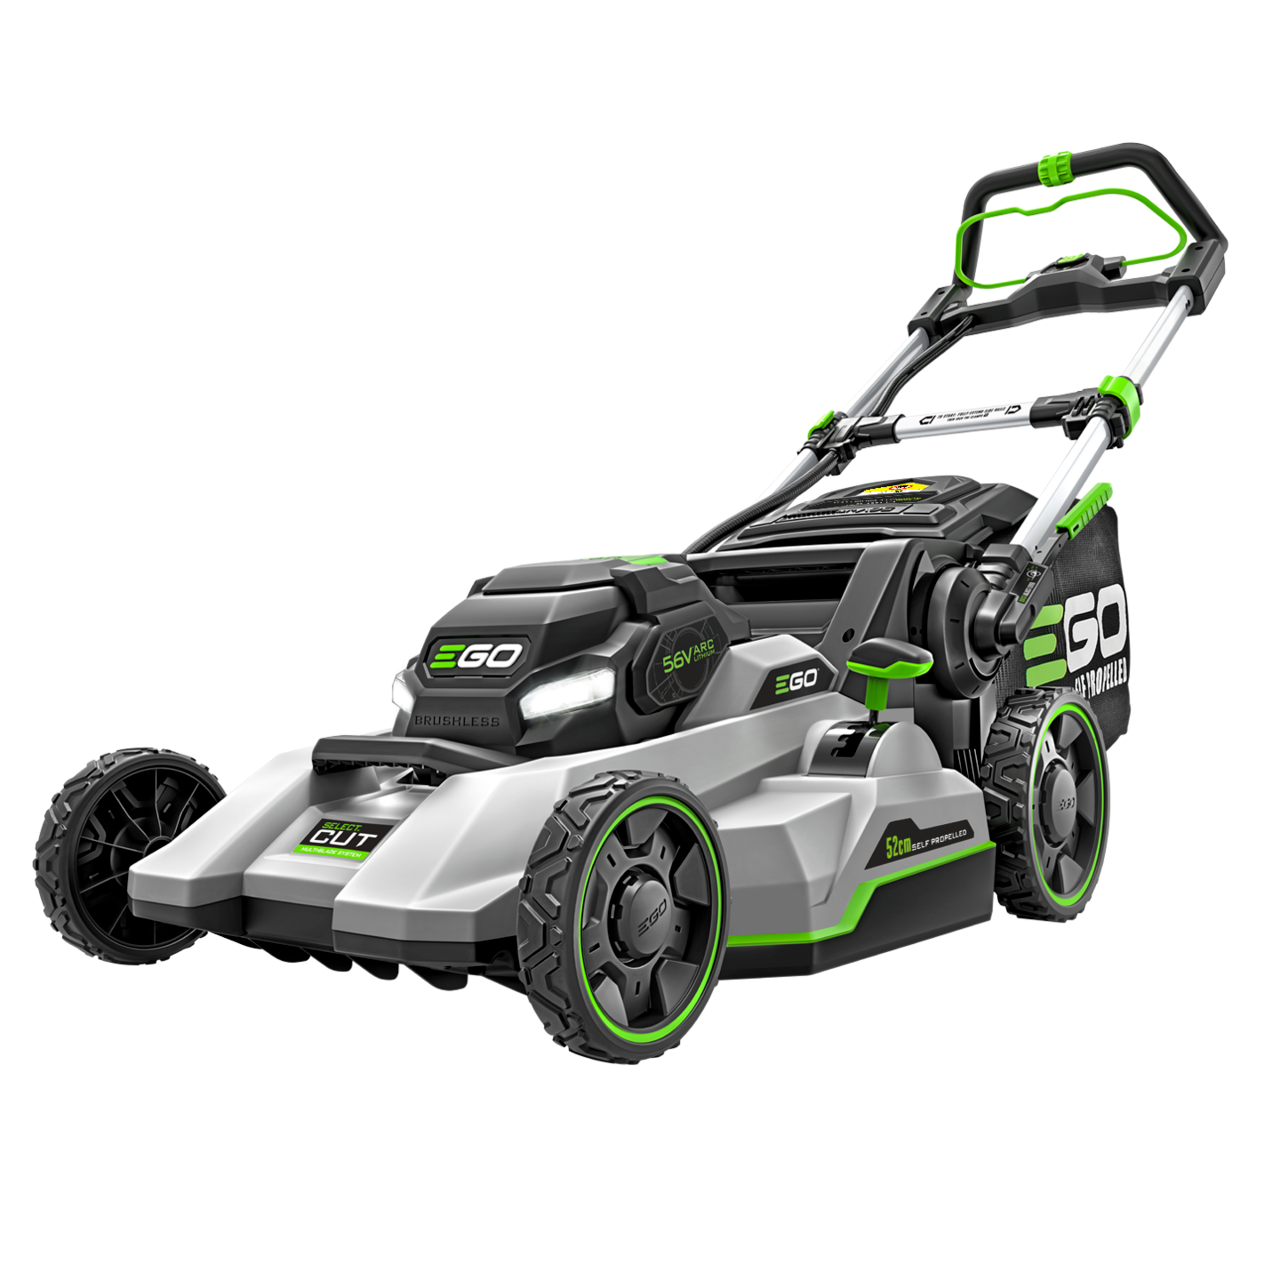 EGO LM2130E-SP Cordless Lawn Mower 52cm